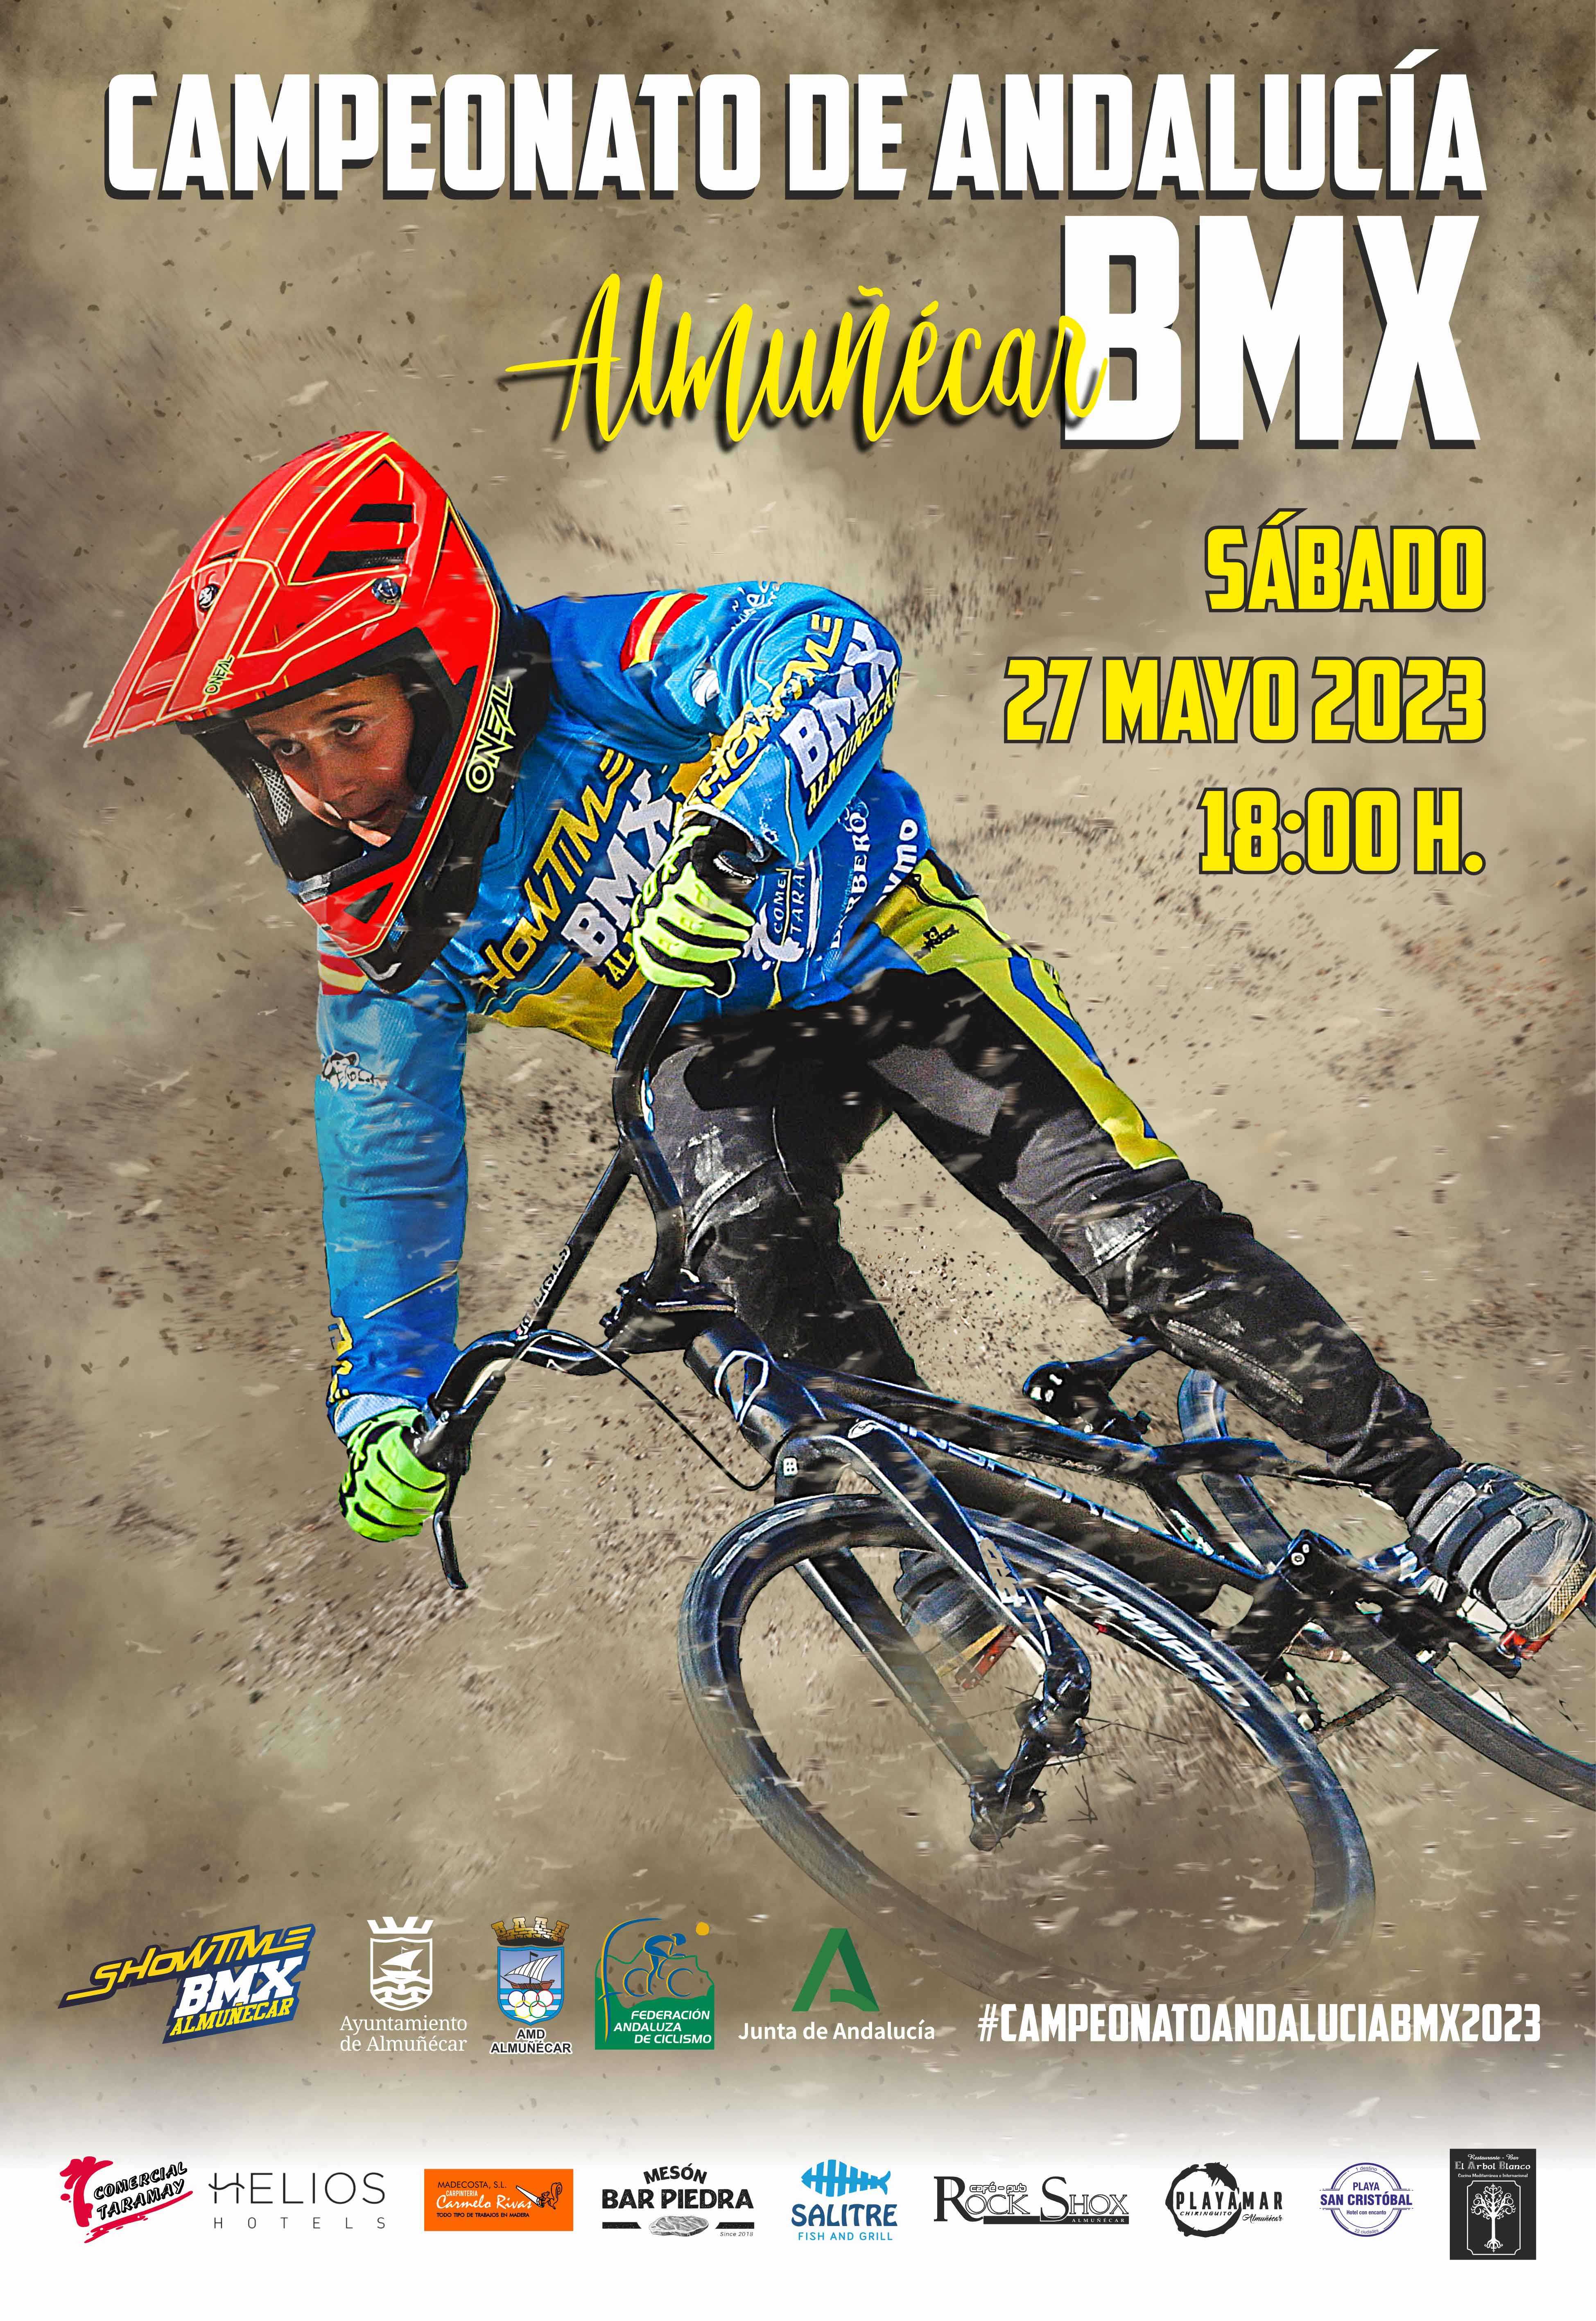 Apertura de inscripciones para el Campeonato de Andalucía BMX 2023